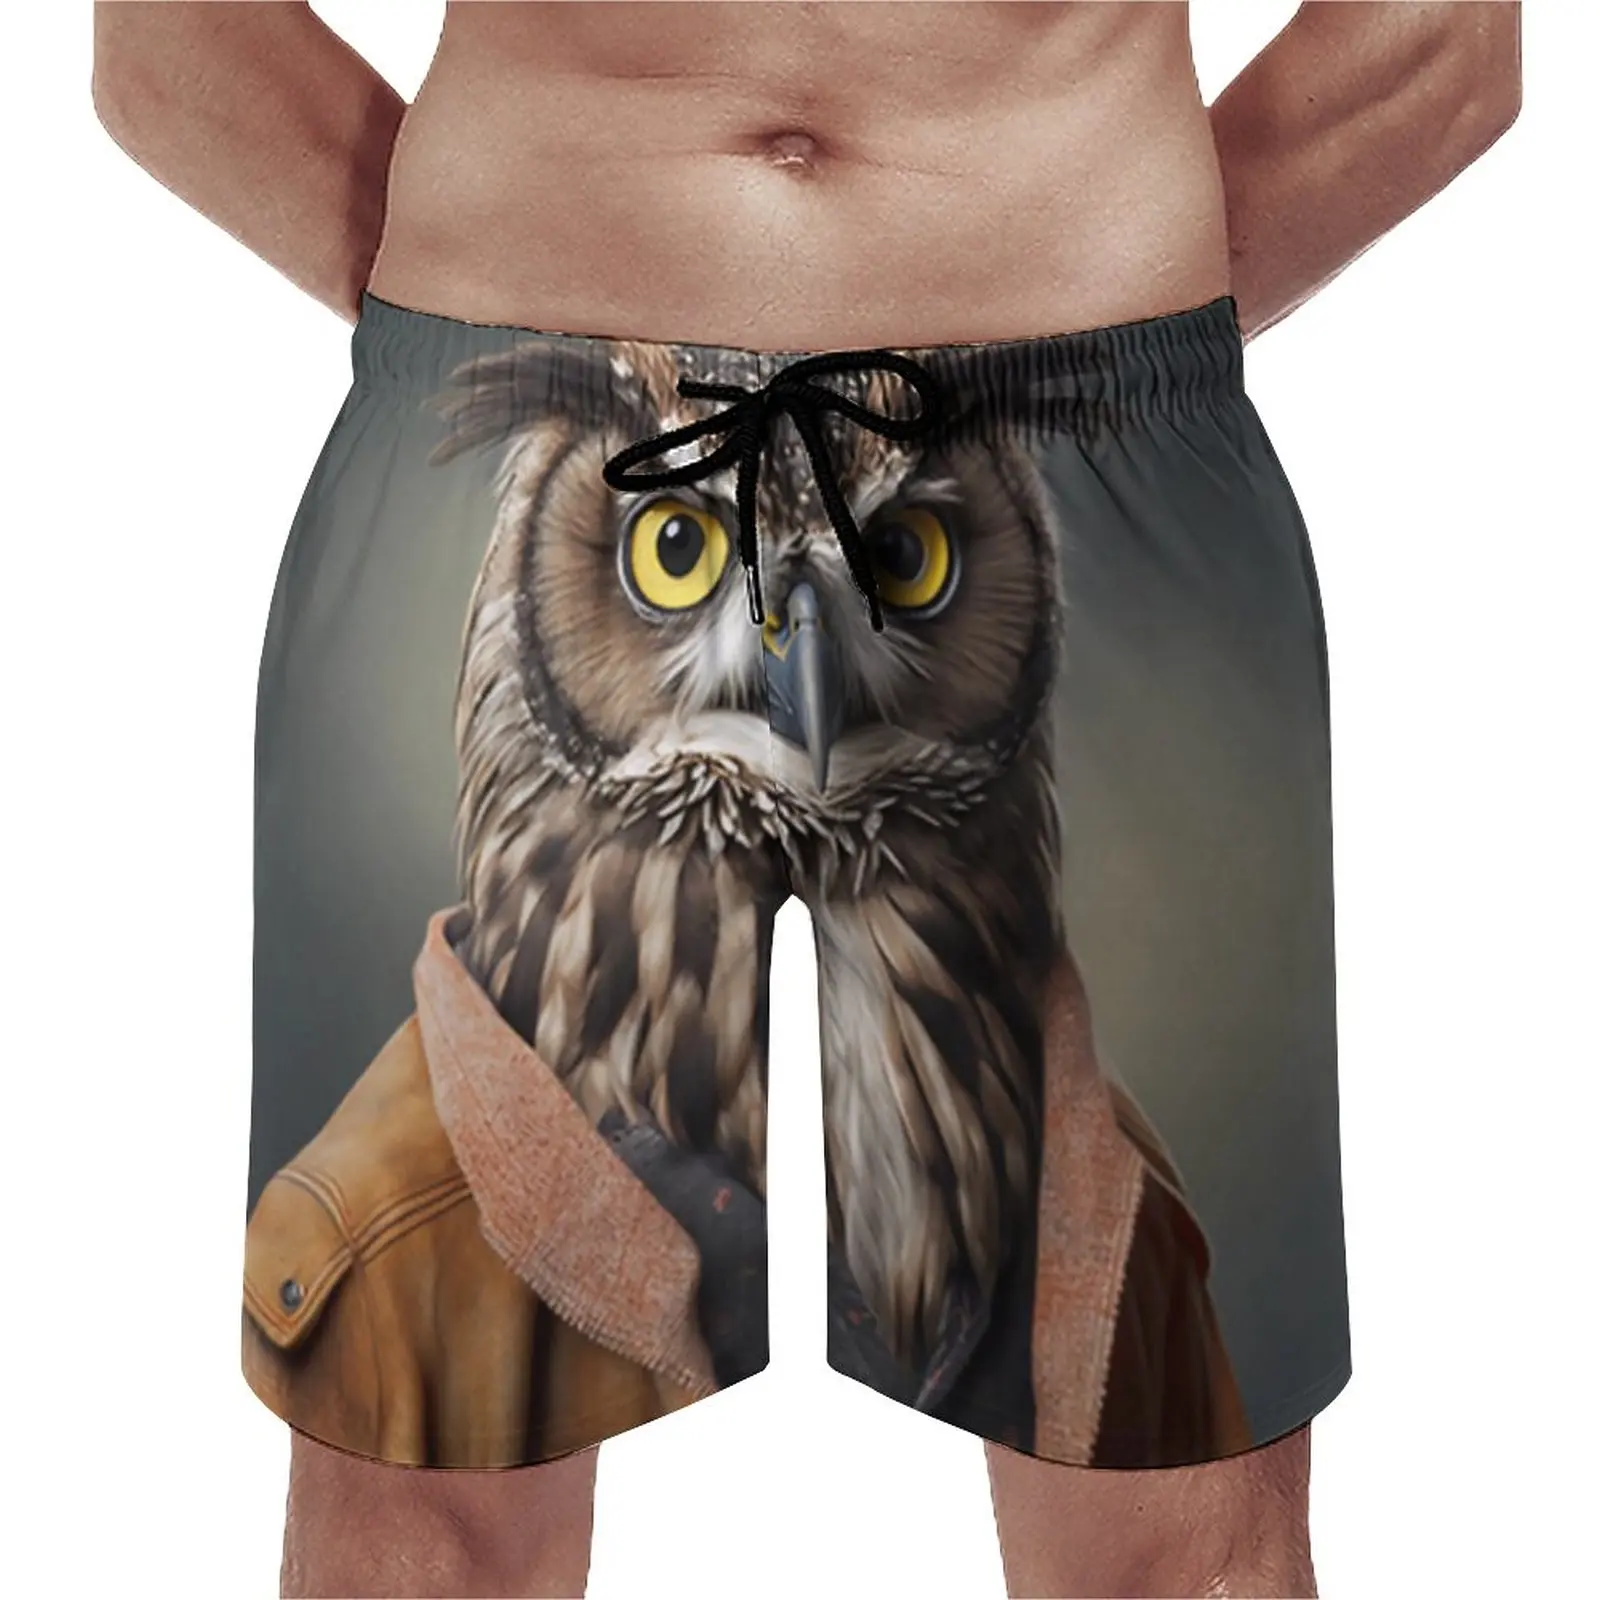 

Owl Board Shorts Summer Dapper Clothing Vintage Beach Short Pants Men's Running Surf Quick Drying Design Beach Trunks